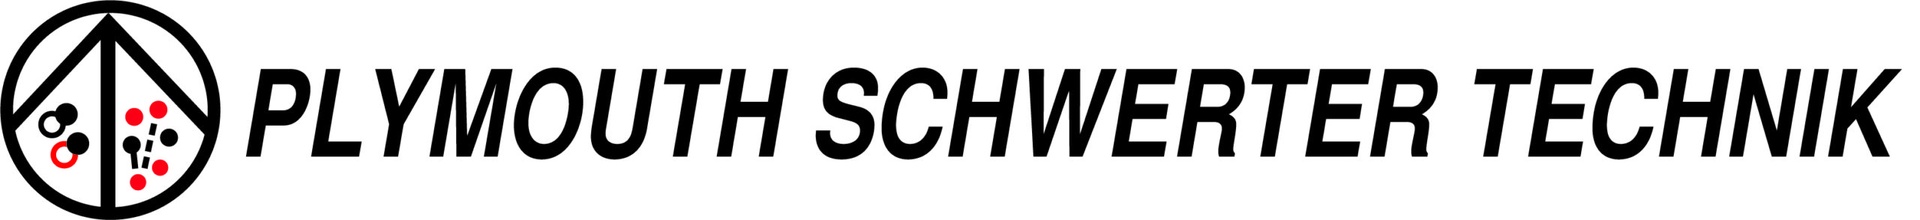 Plymouth Schwerter Technik GmbH & Co. KG